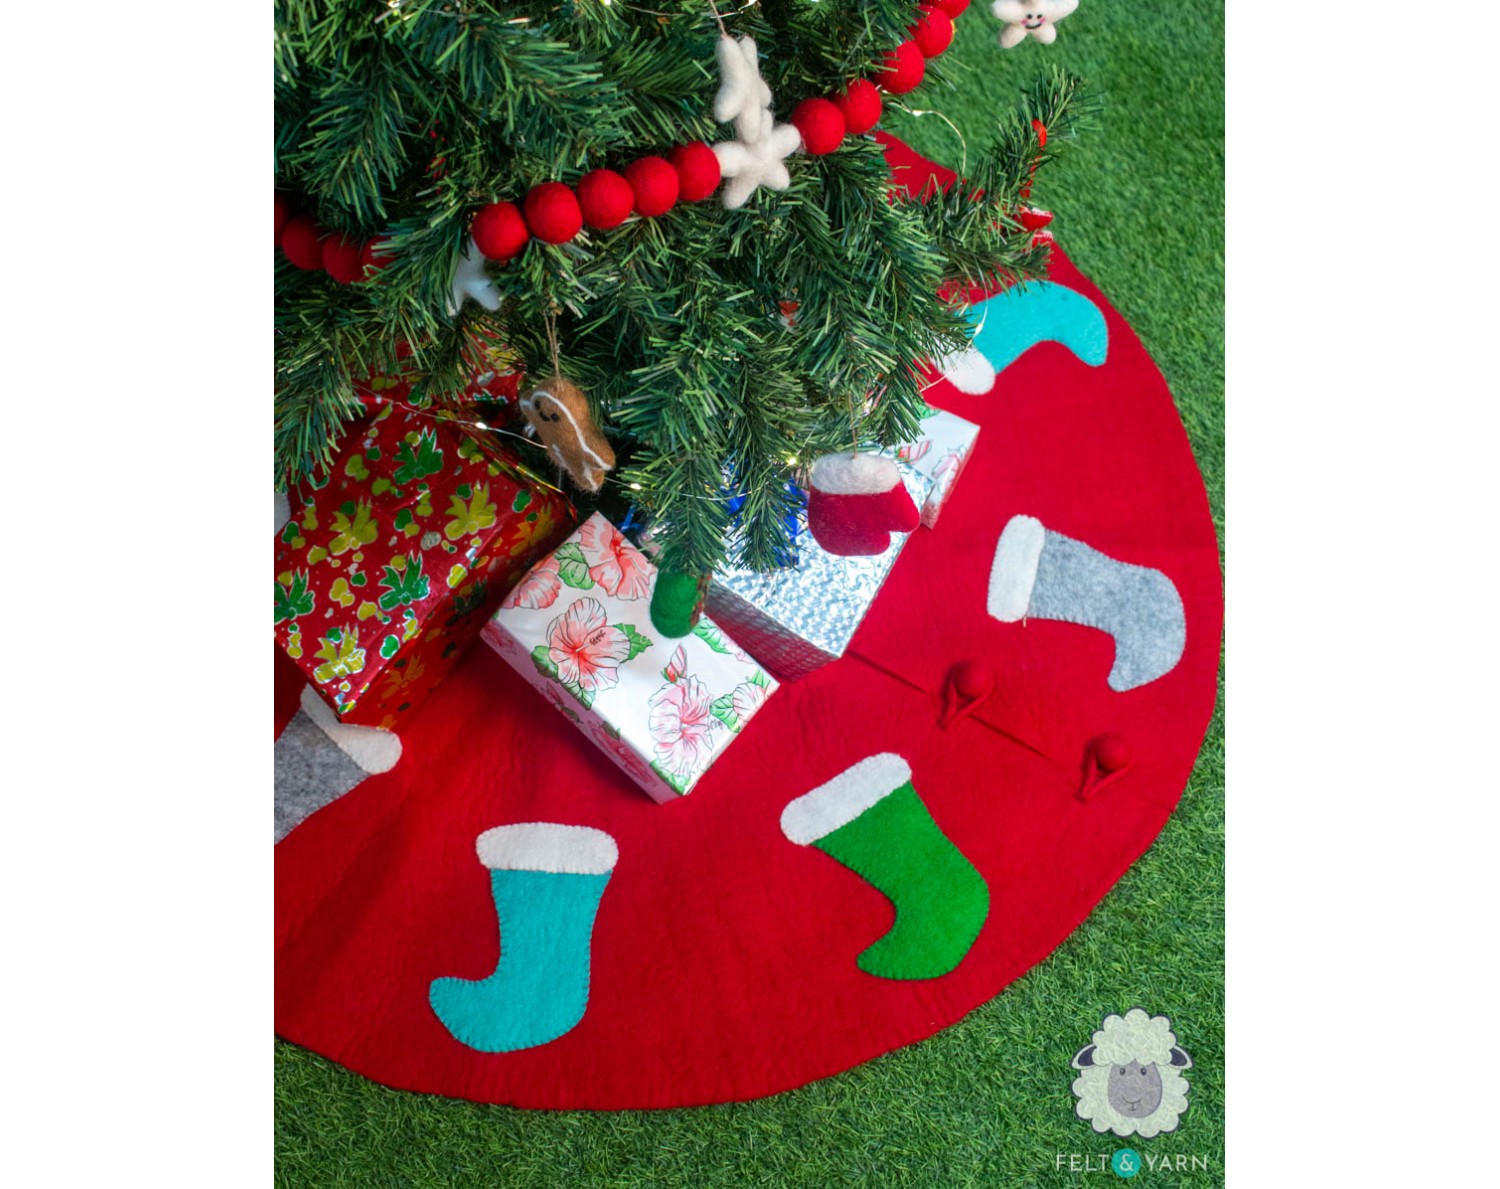 Buy 42 inch Red felt tree skirt with stockings - Felt & Yarn